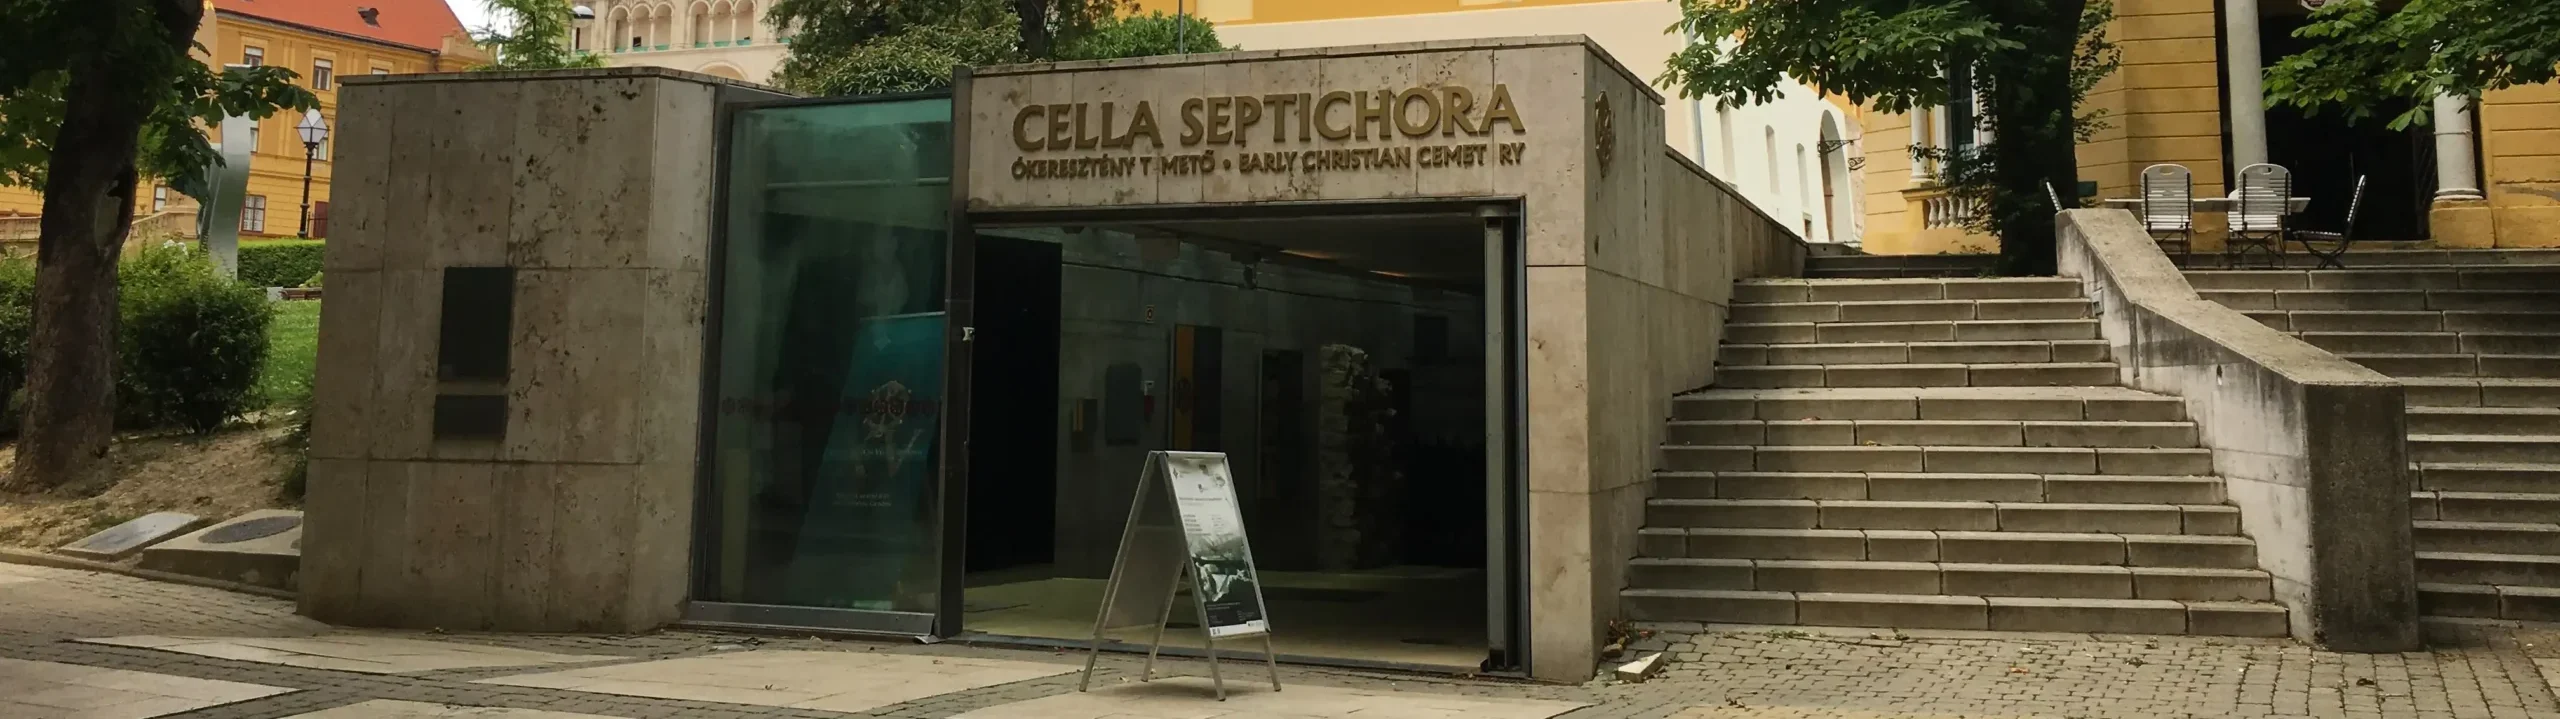 Cella septichora